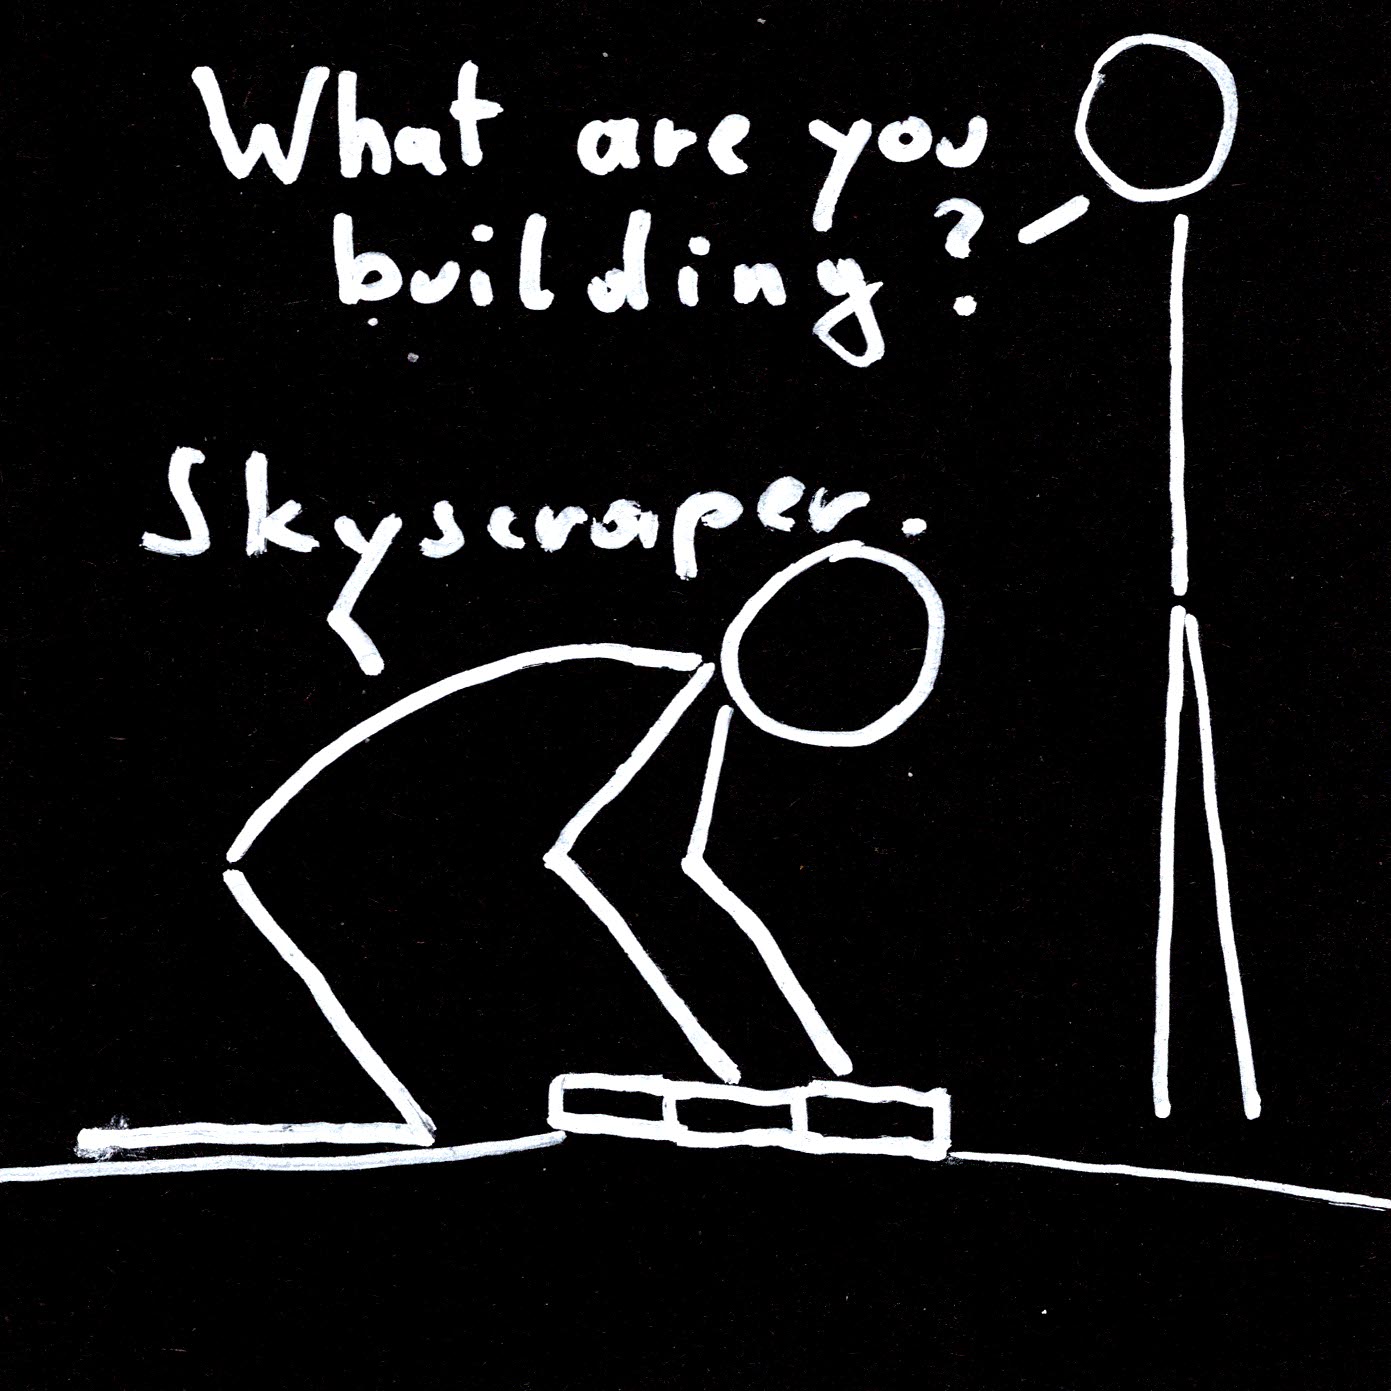 What are you building? Skyscraper.